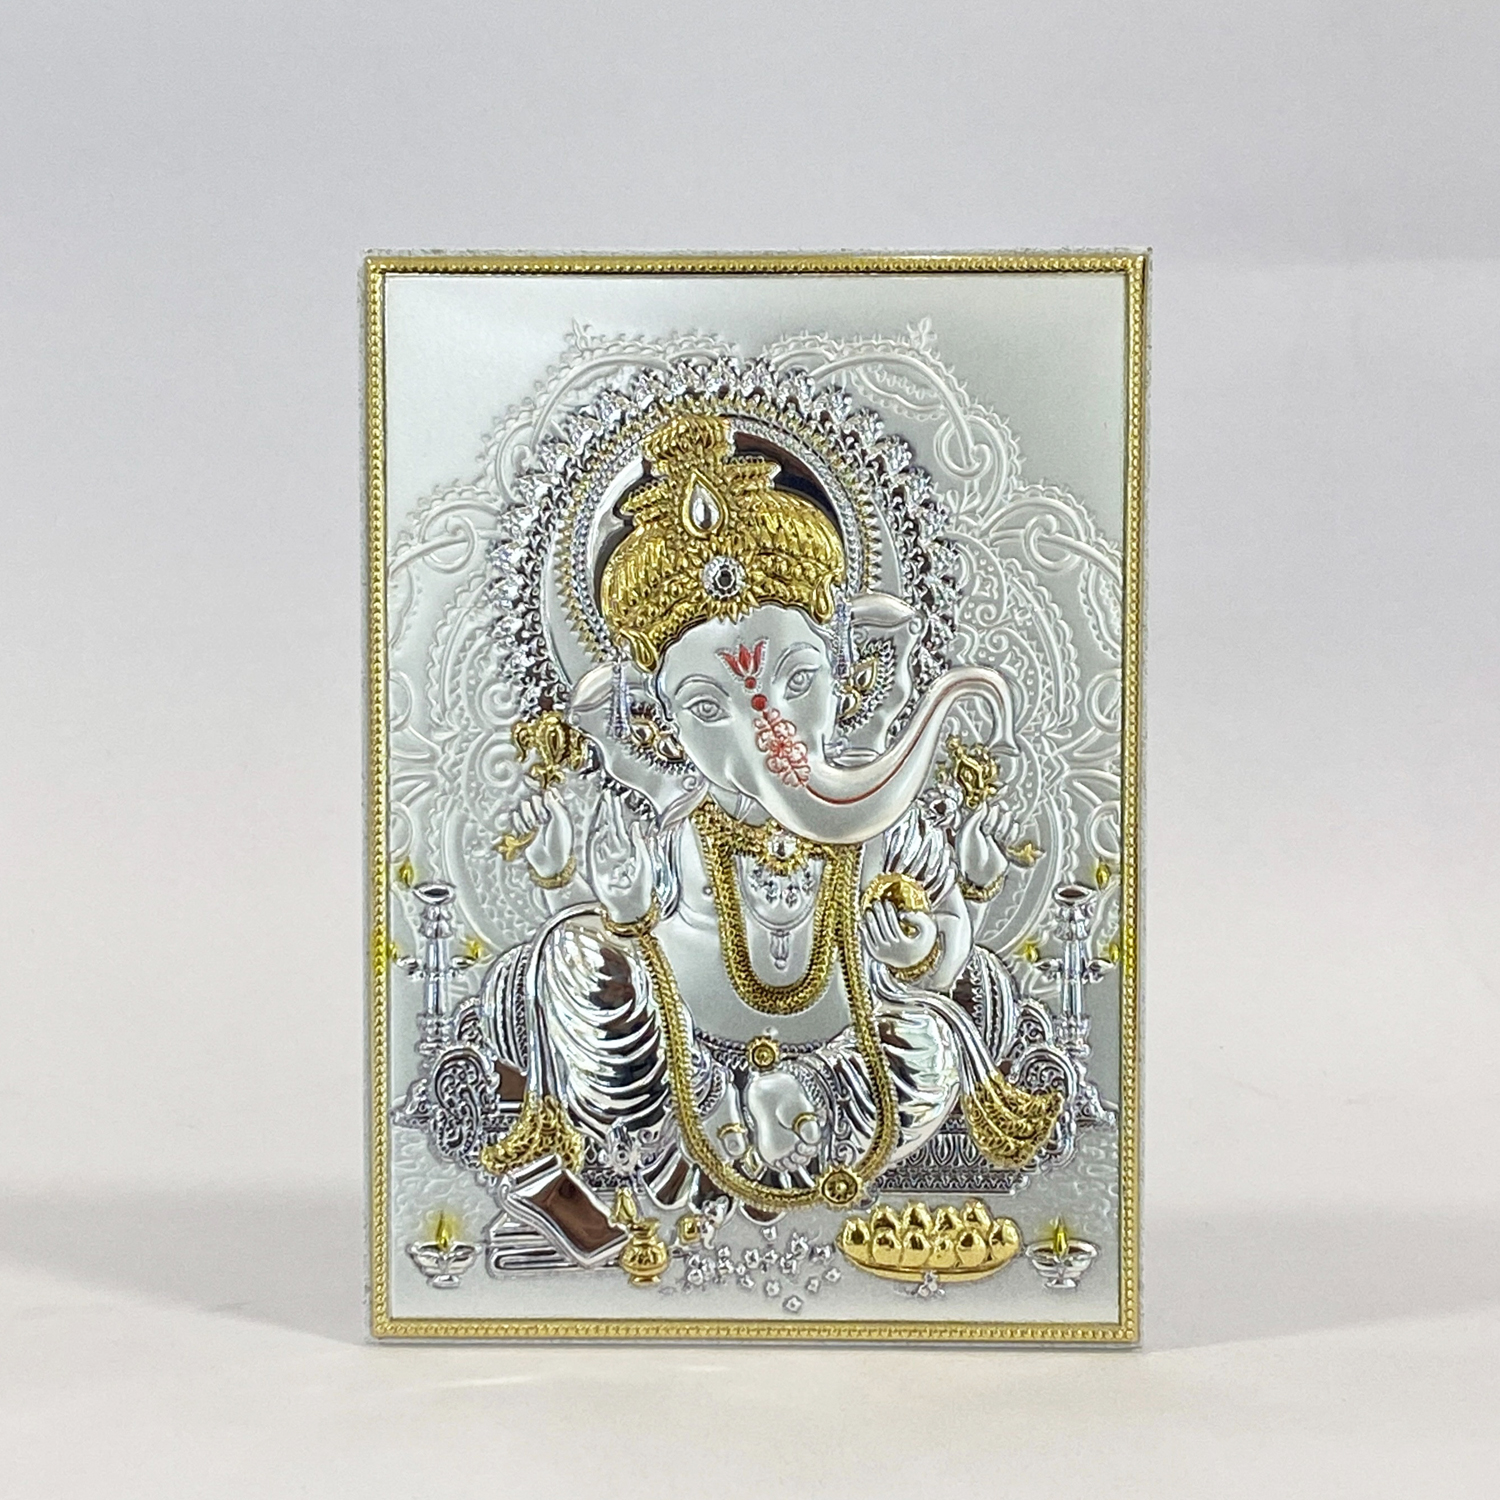 A Silver Tabletop Plaque of Ganesha | 5.2 Inch